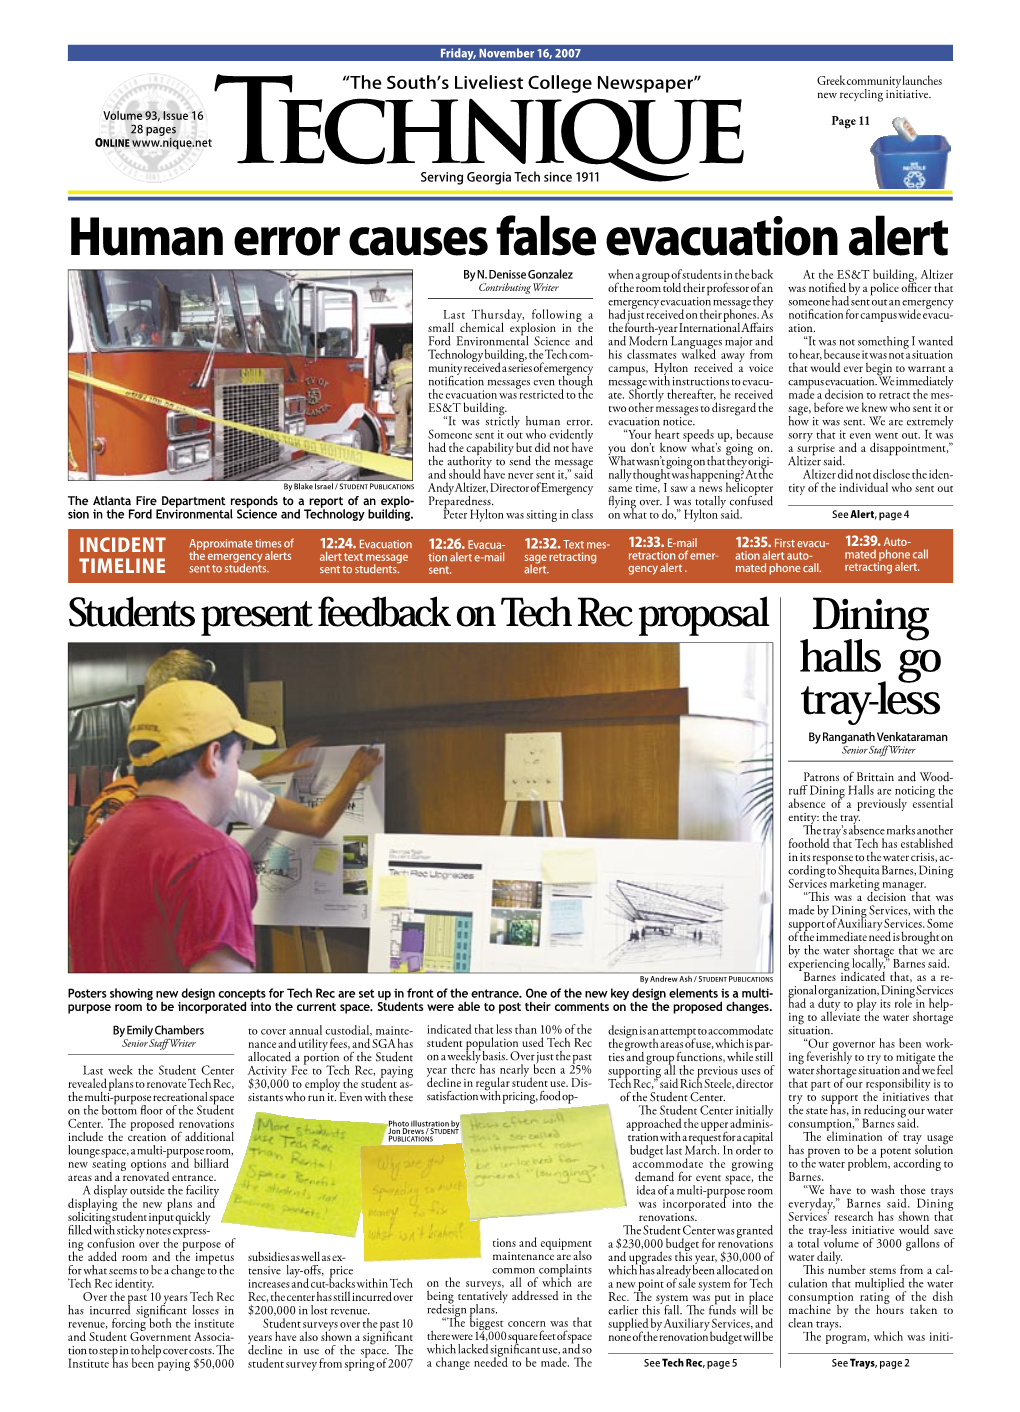 Human Error Causes False Evacuation Alert by N